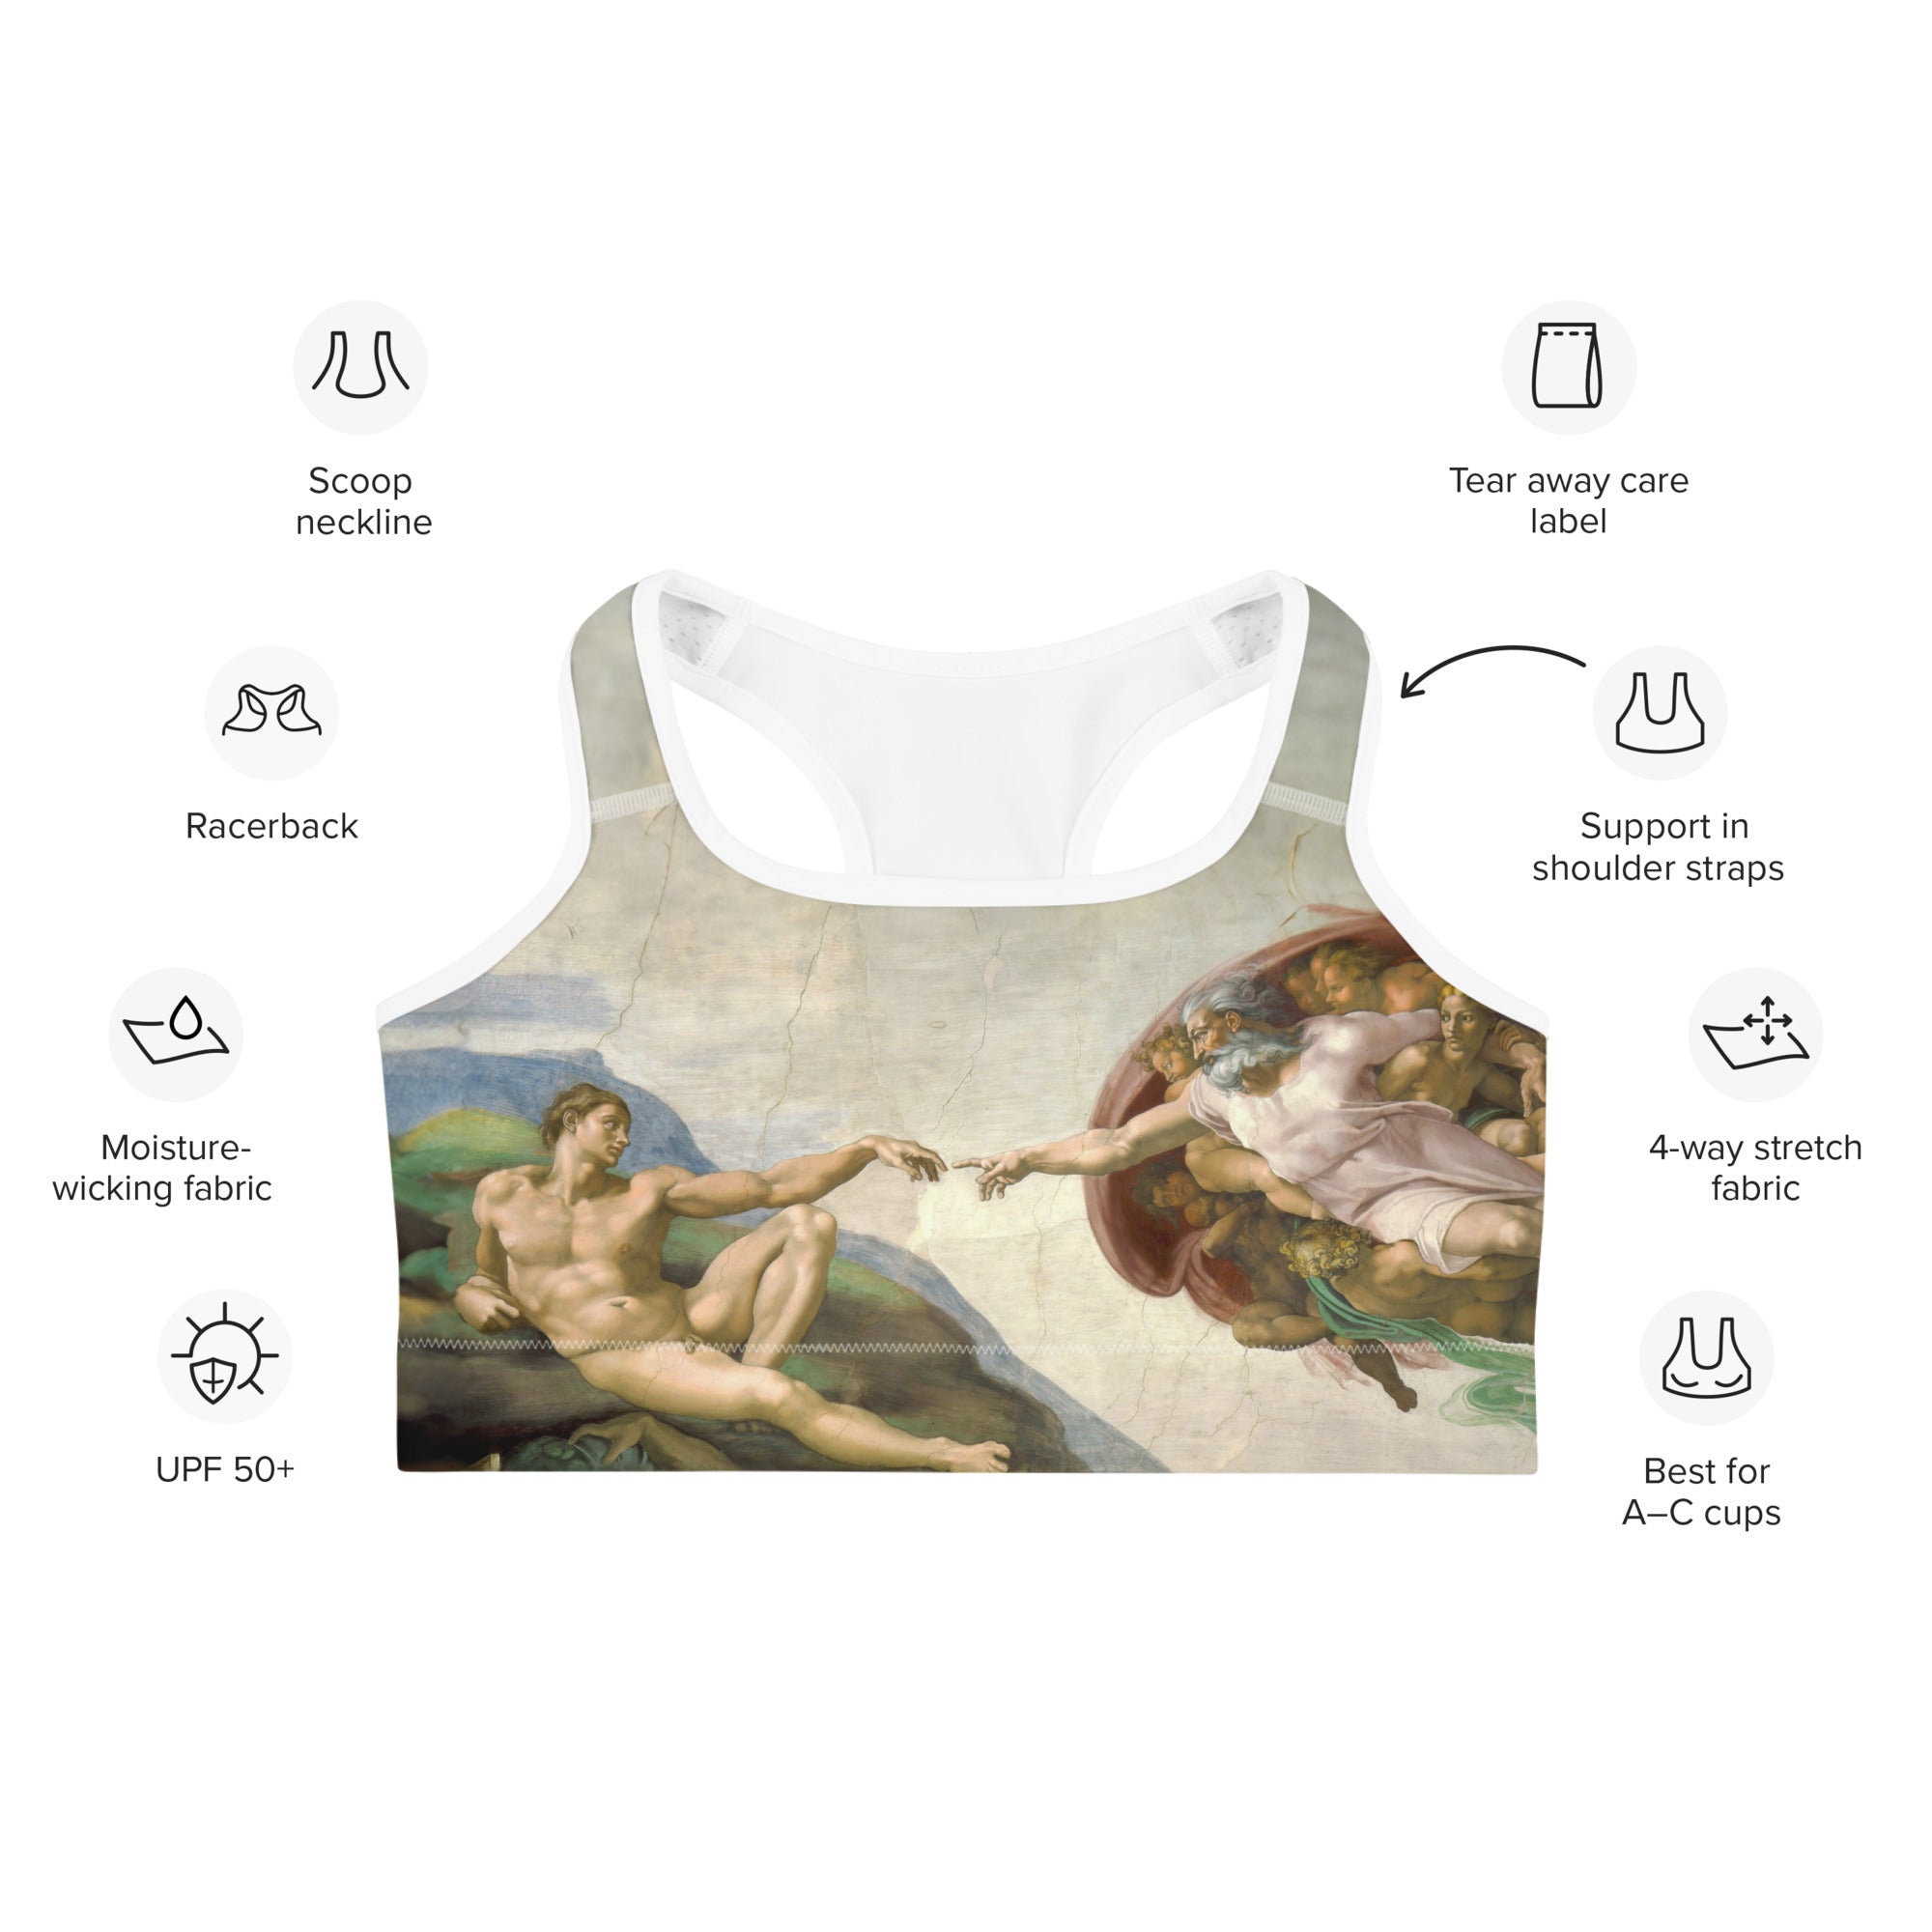 Michelangelo 'The Creation of Adam' Famous Painting Sports Bra | Premium Art Sports Bra